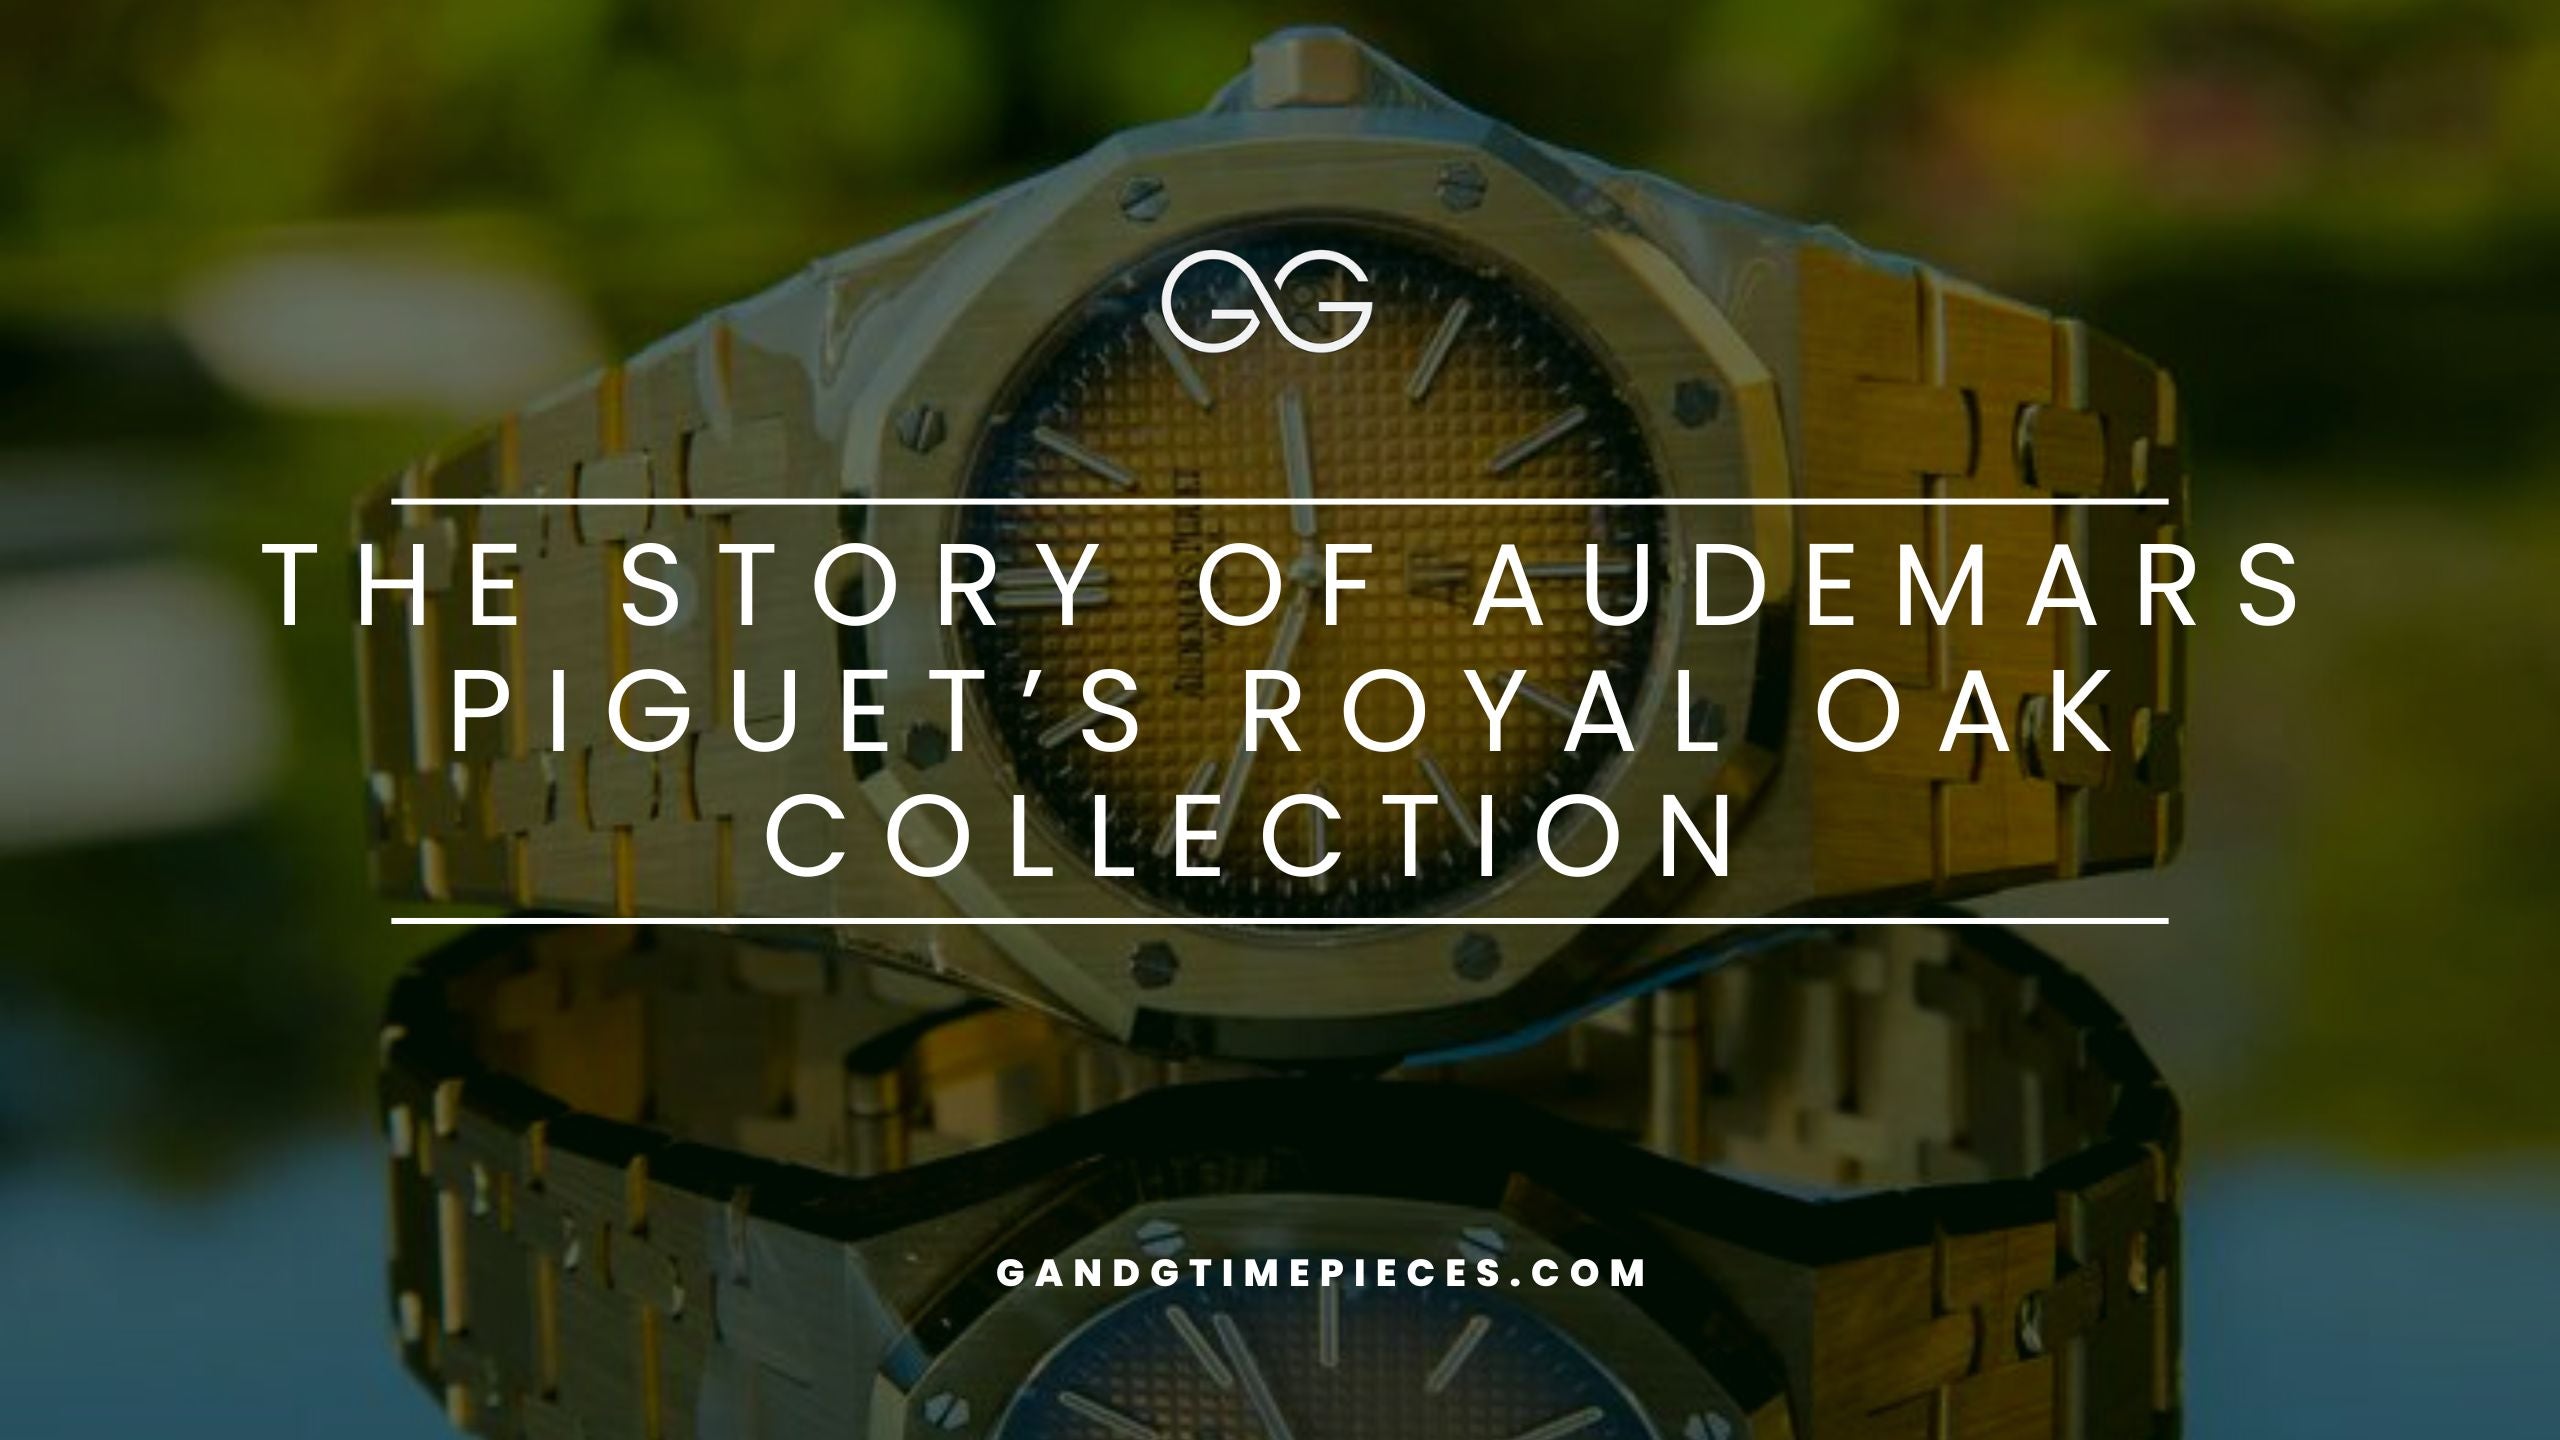 The Story of Audemars Piguet’s Royal Oak Collection